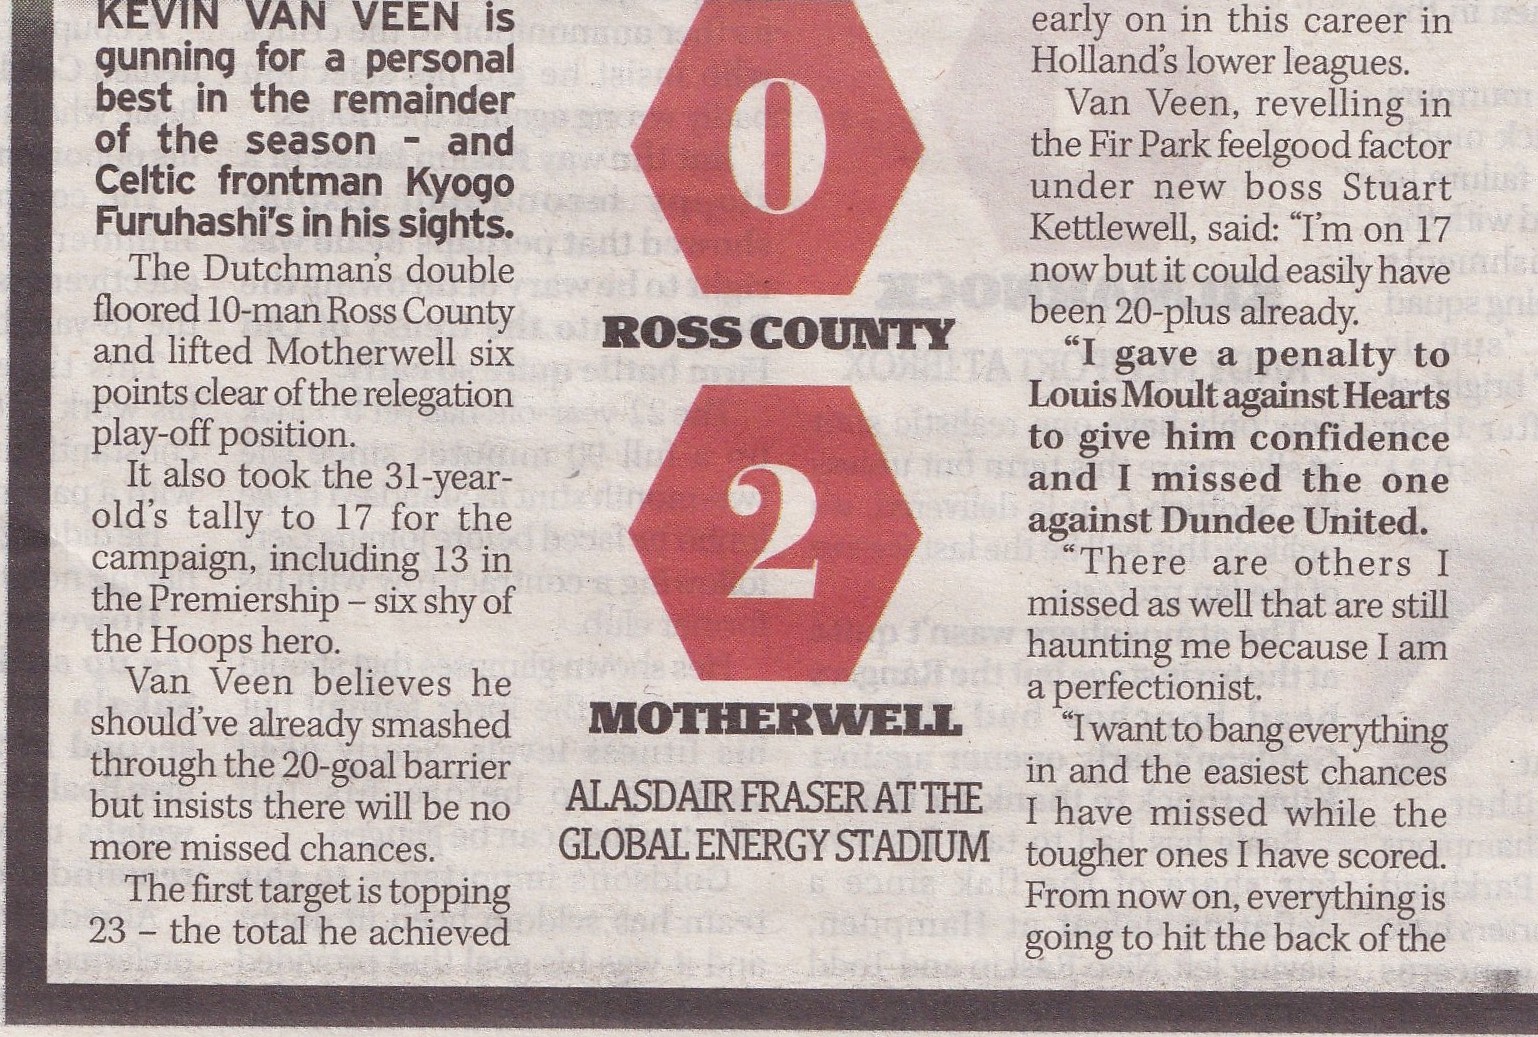 Ross County versus Motherwell Newspaper Match Report Snippet